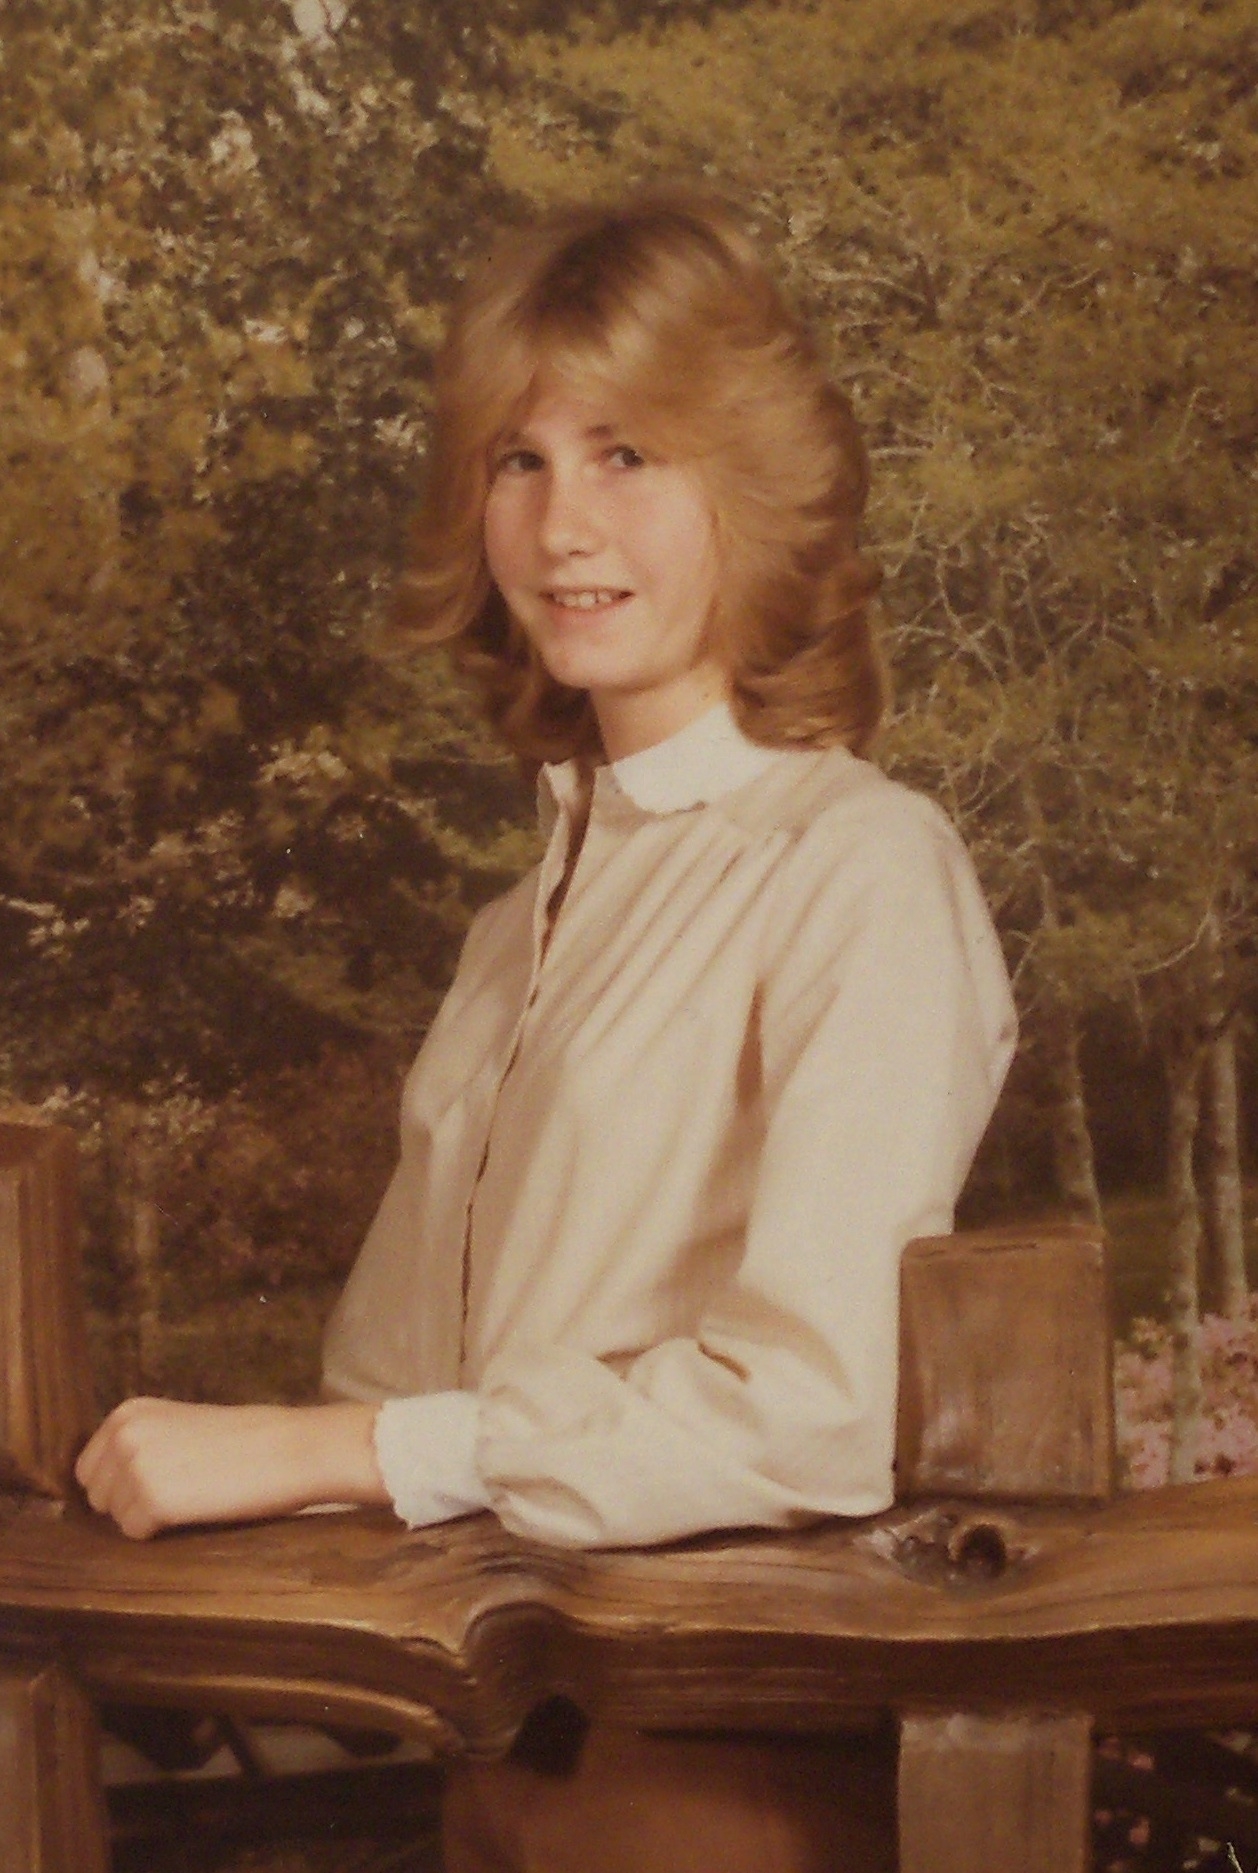 Unknown School girl, 1970's